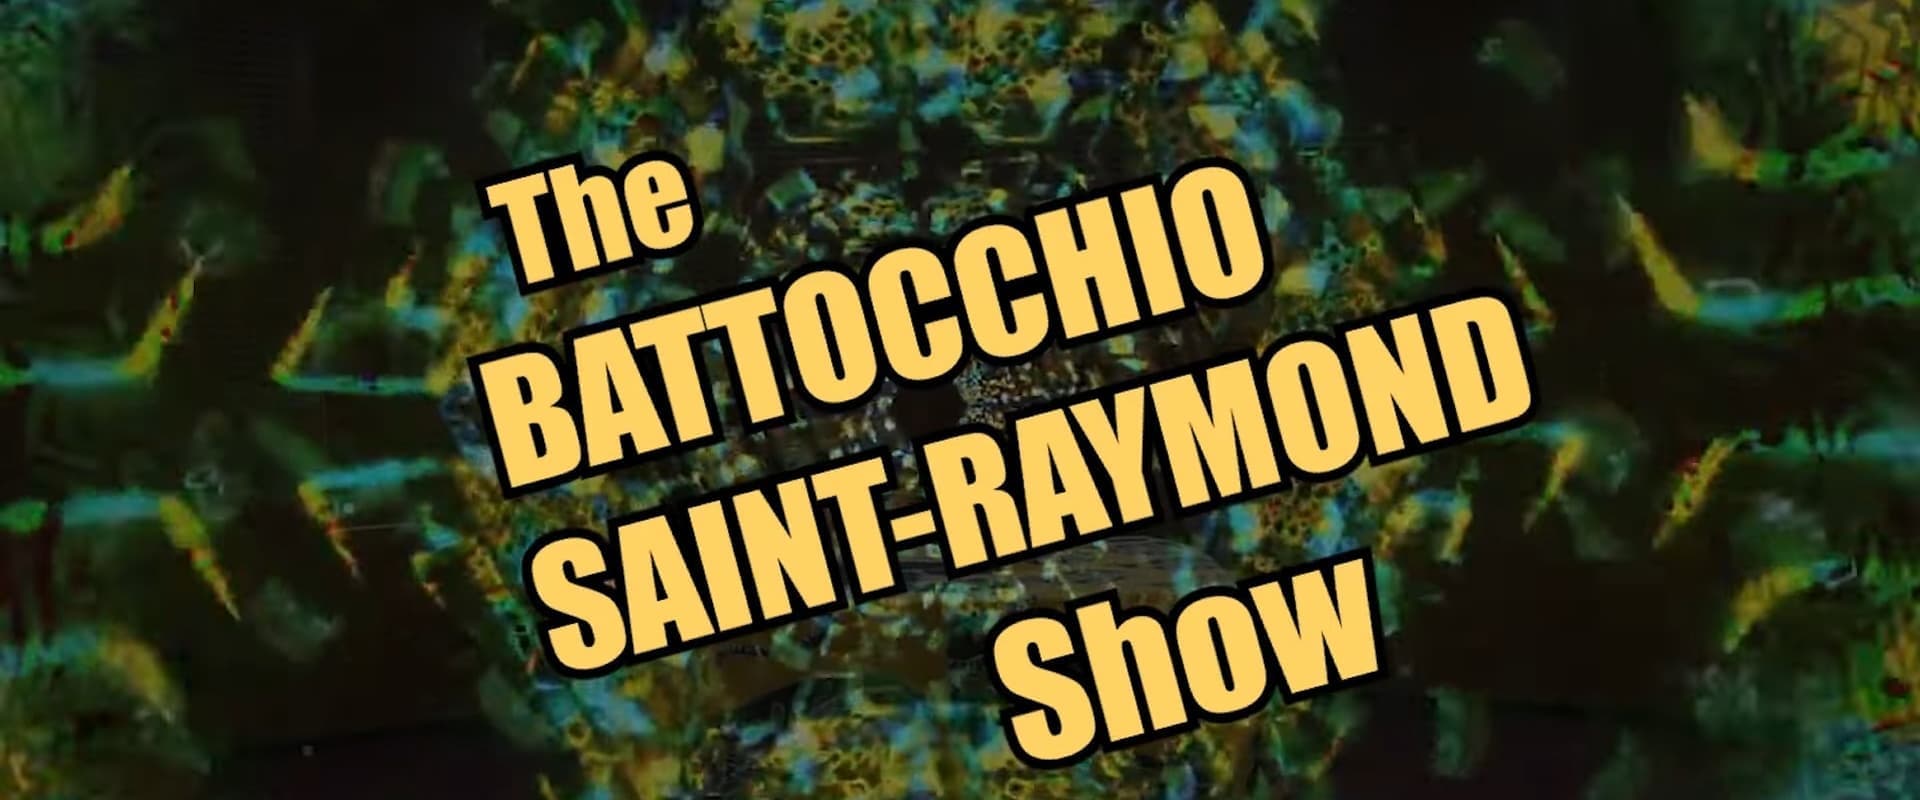 The Battocchio Saint-Raymond Show